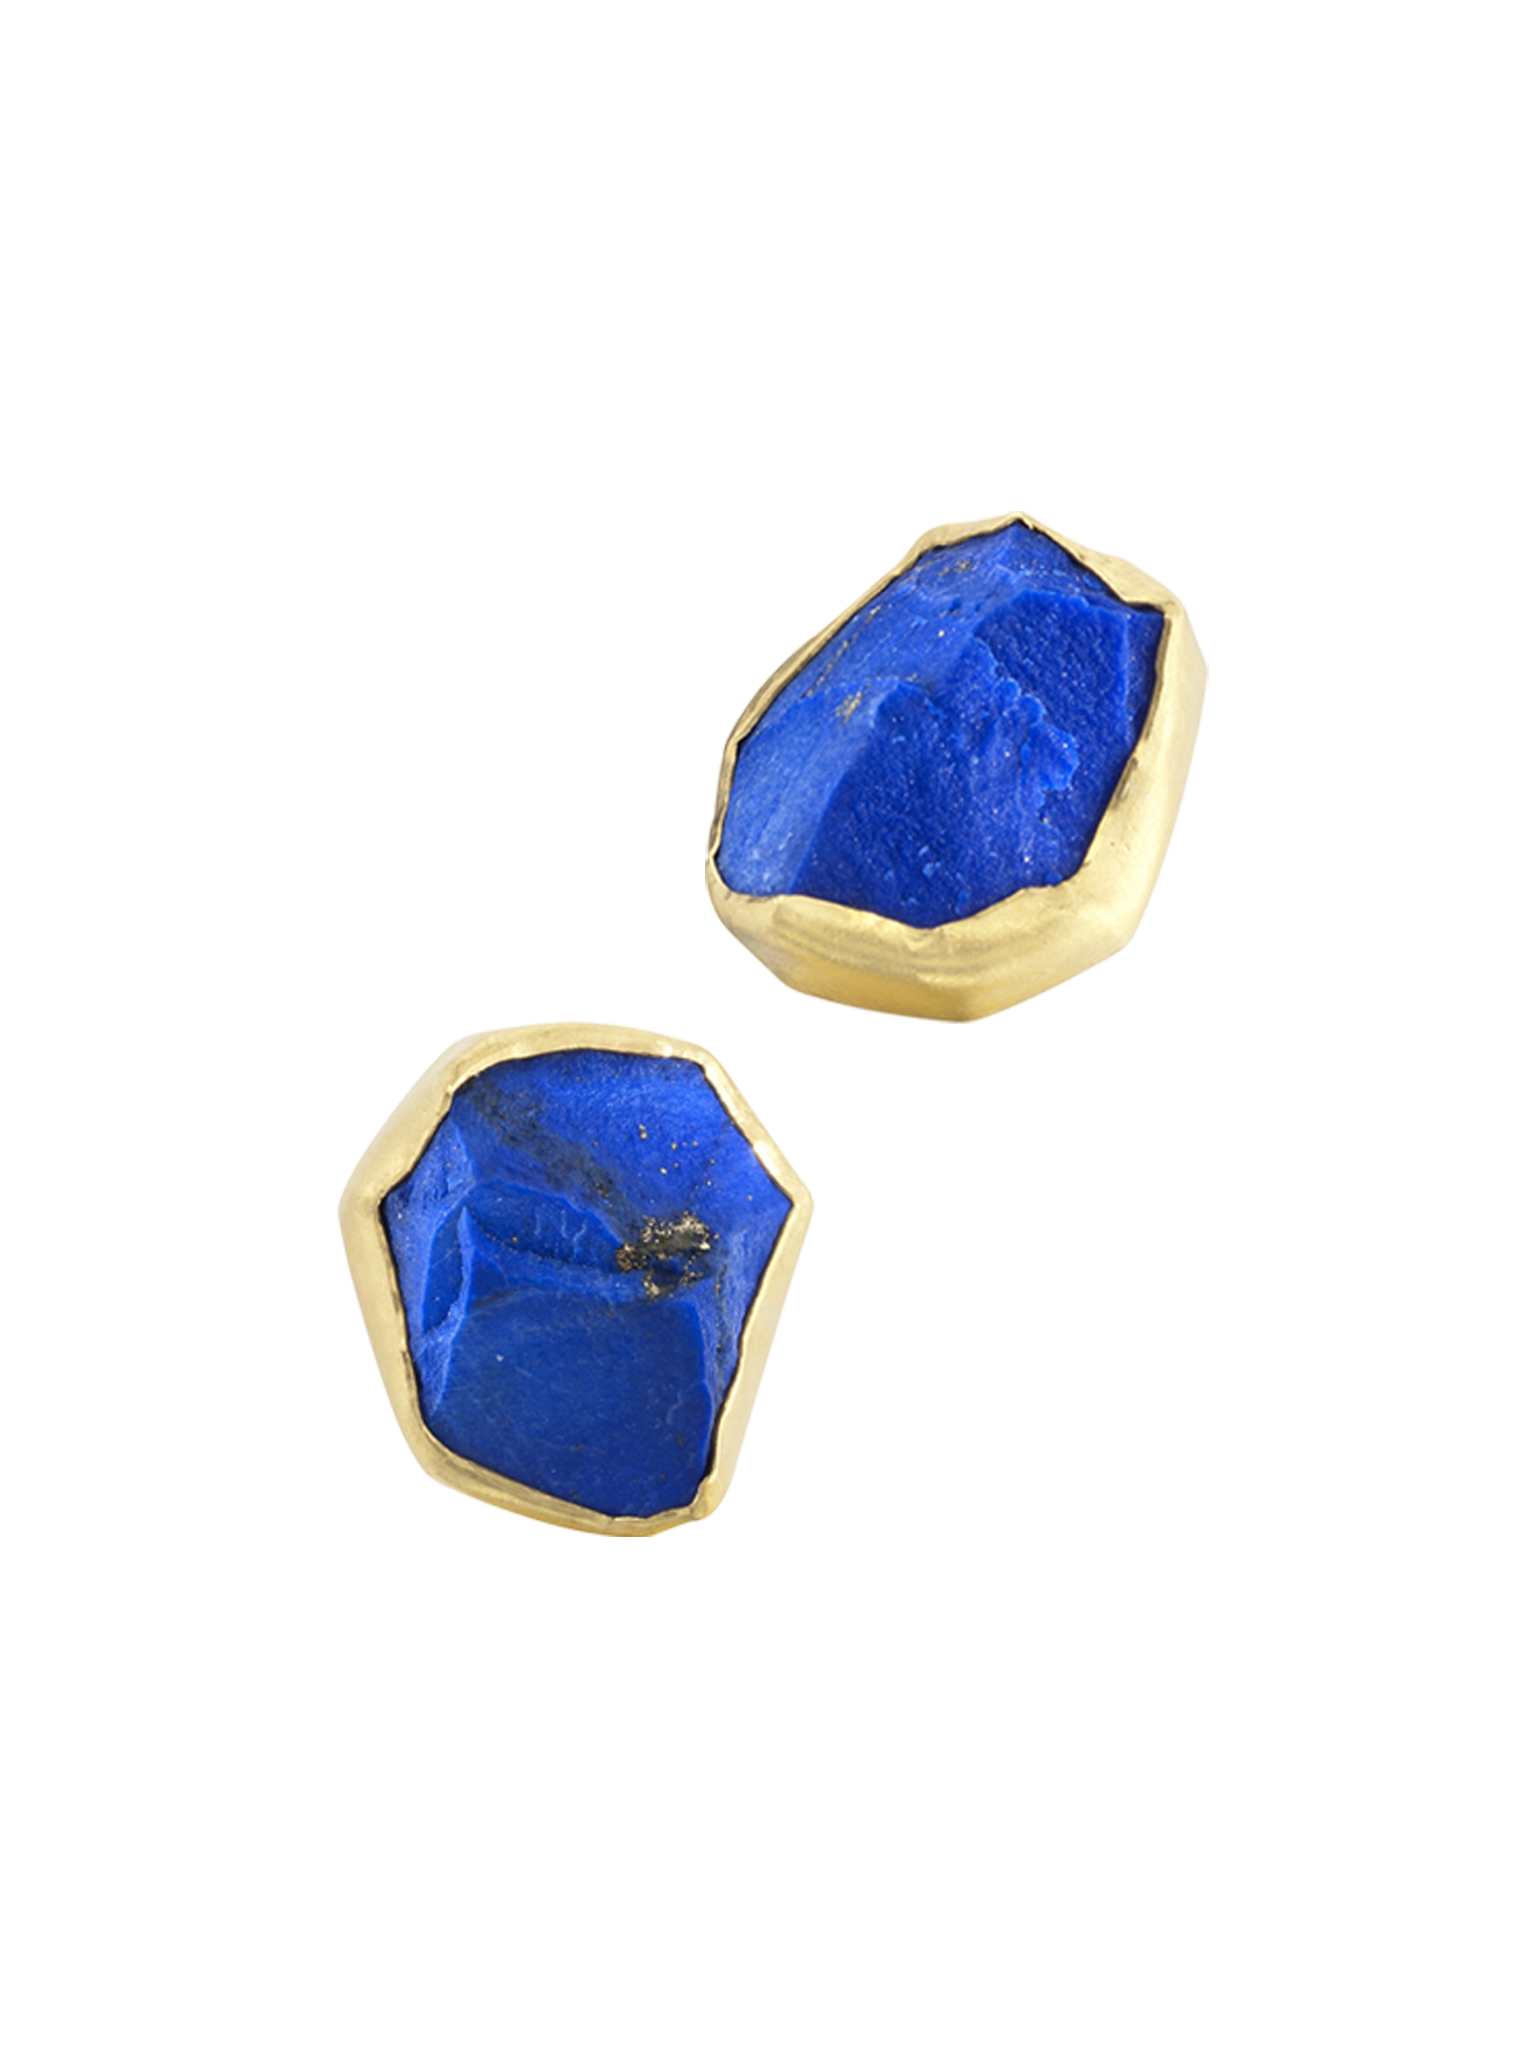 Rough lapis lazuli earrings